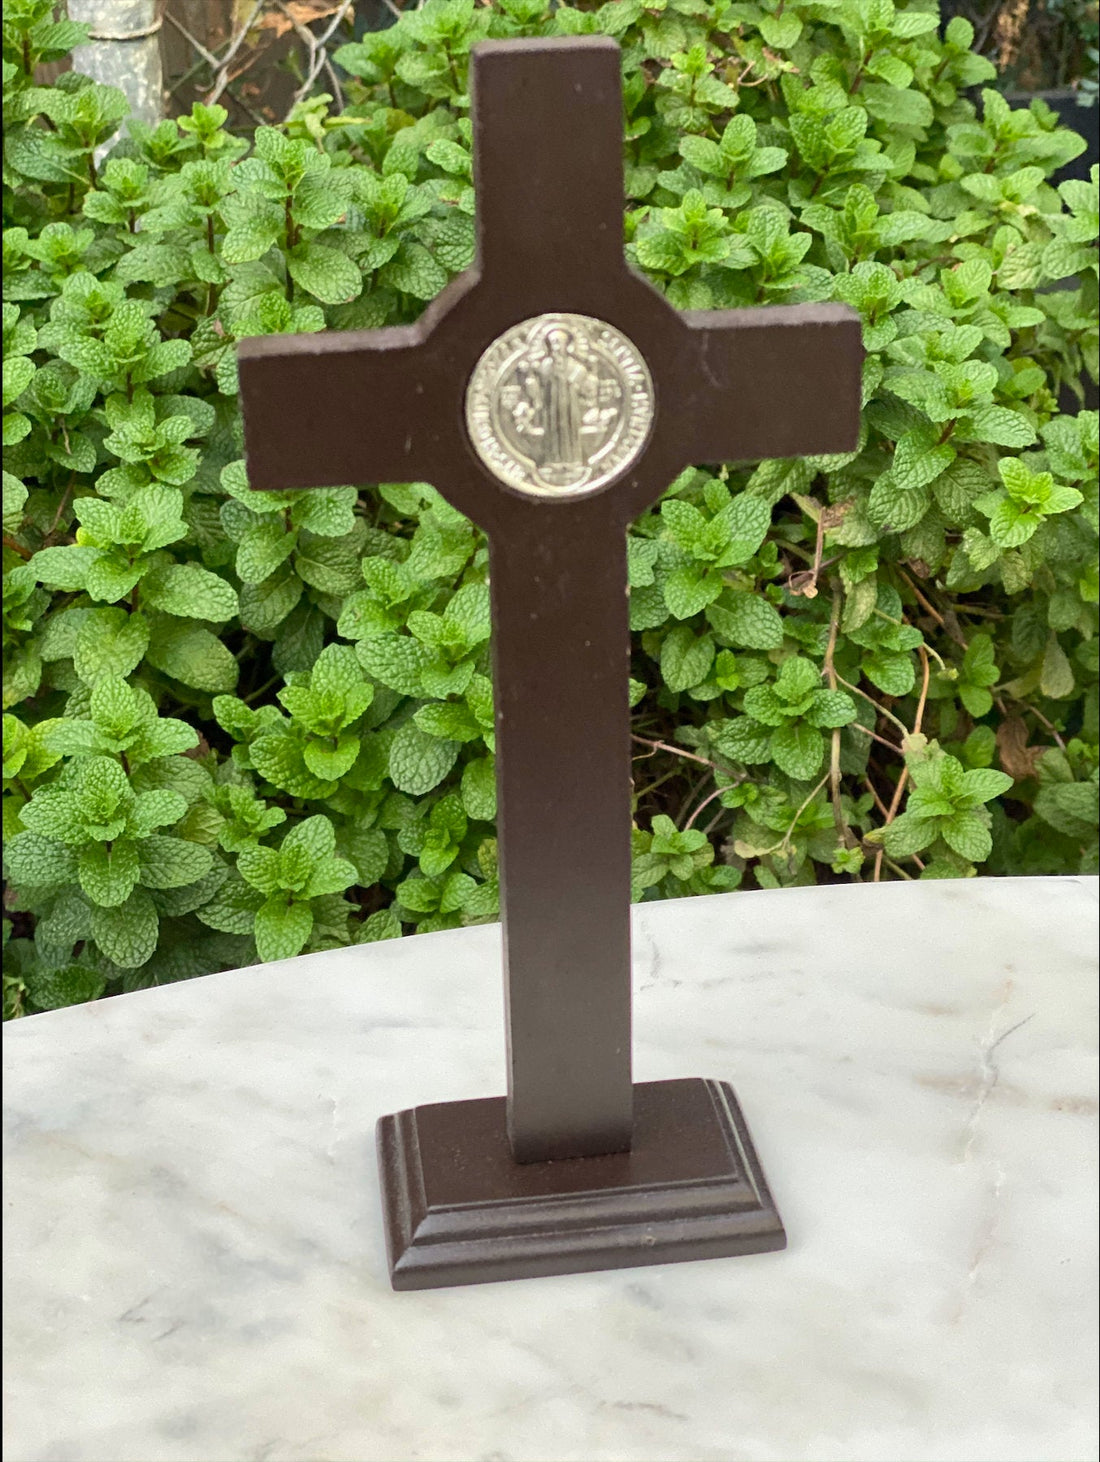 Jesus Crucifix with Saint Benedict Medal